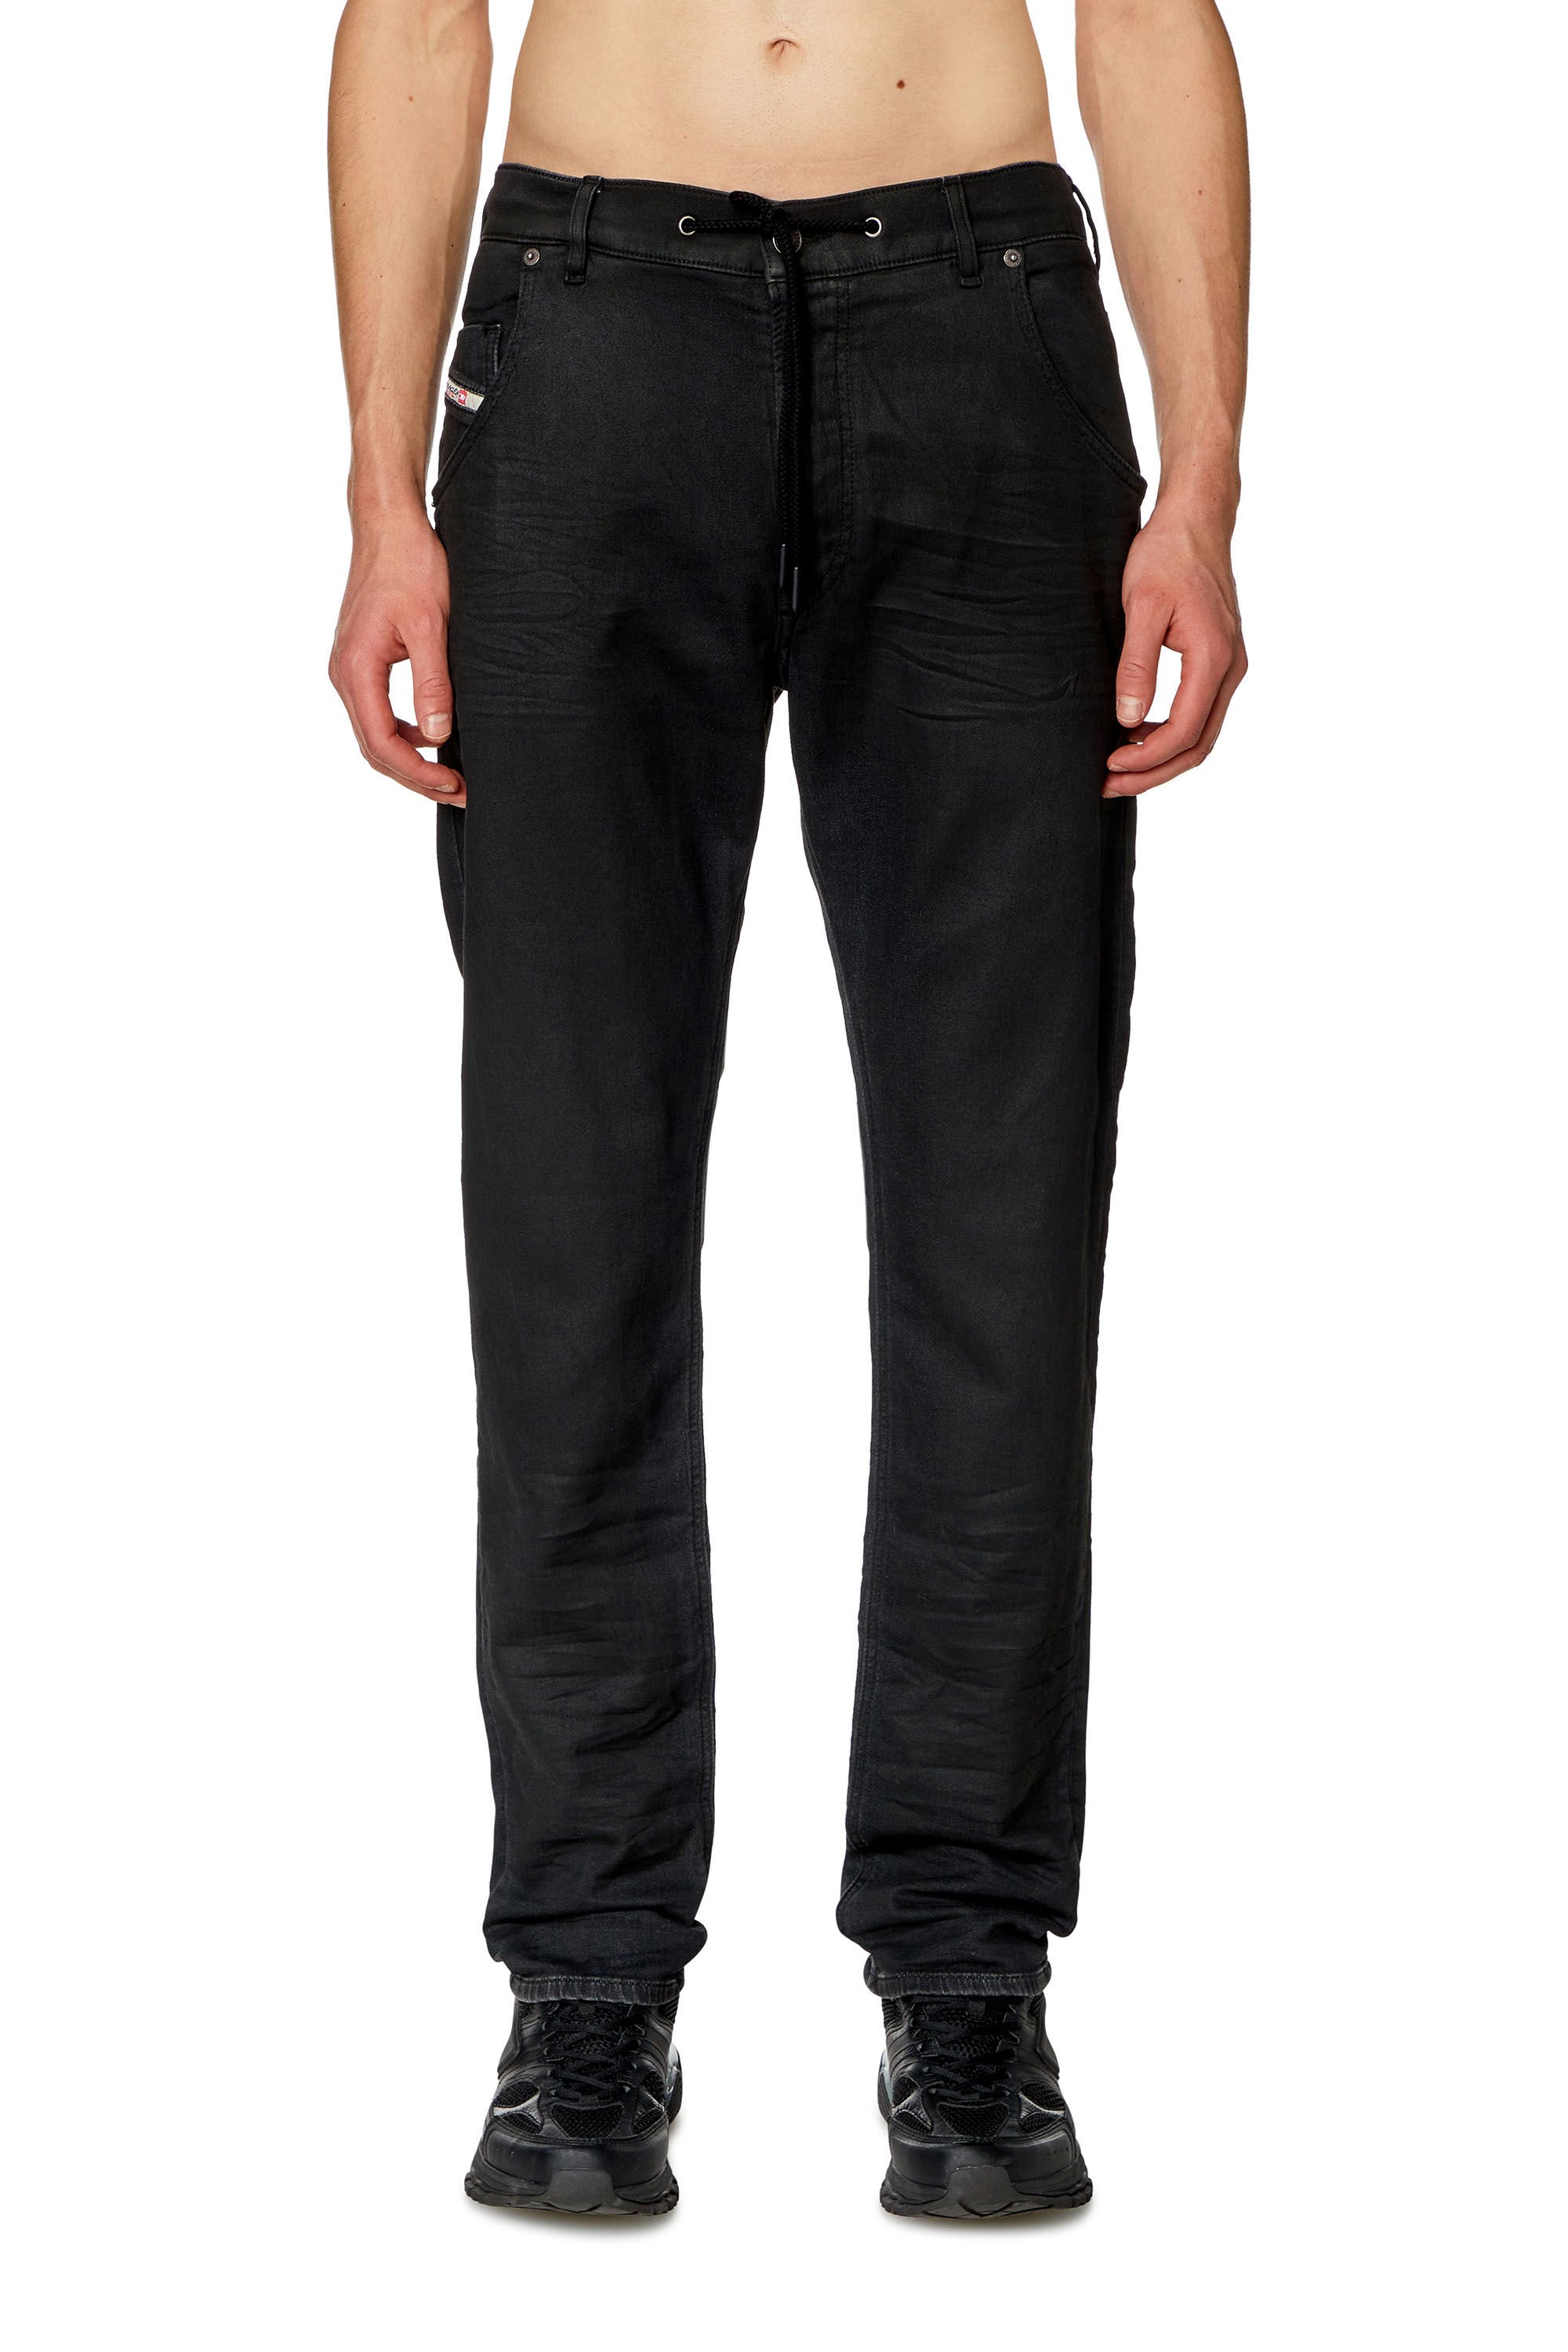 Men's Tapered Jeans | Black/Dark grey | Diesel 2030 D-Krooley Joggjeans®